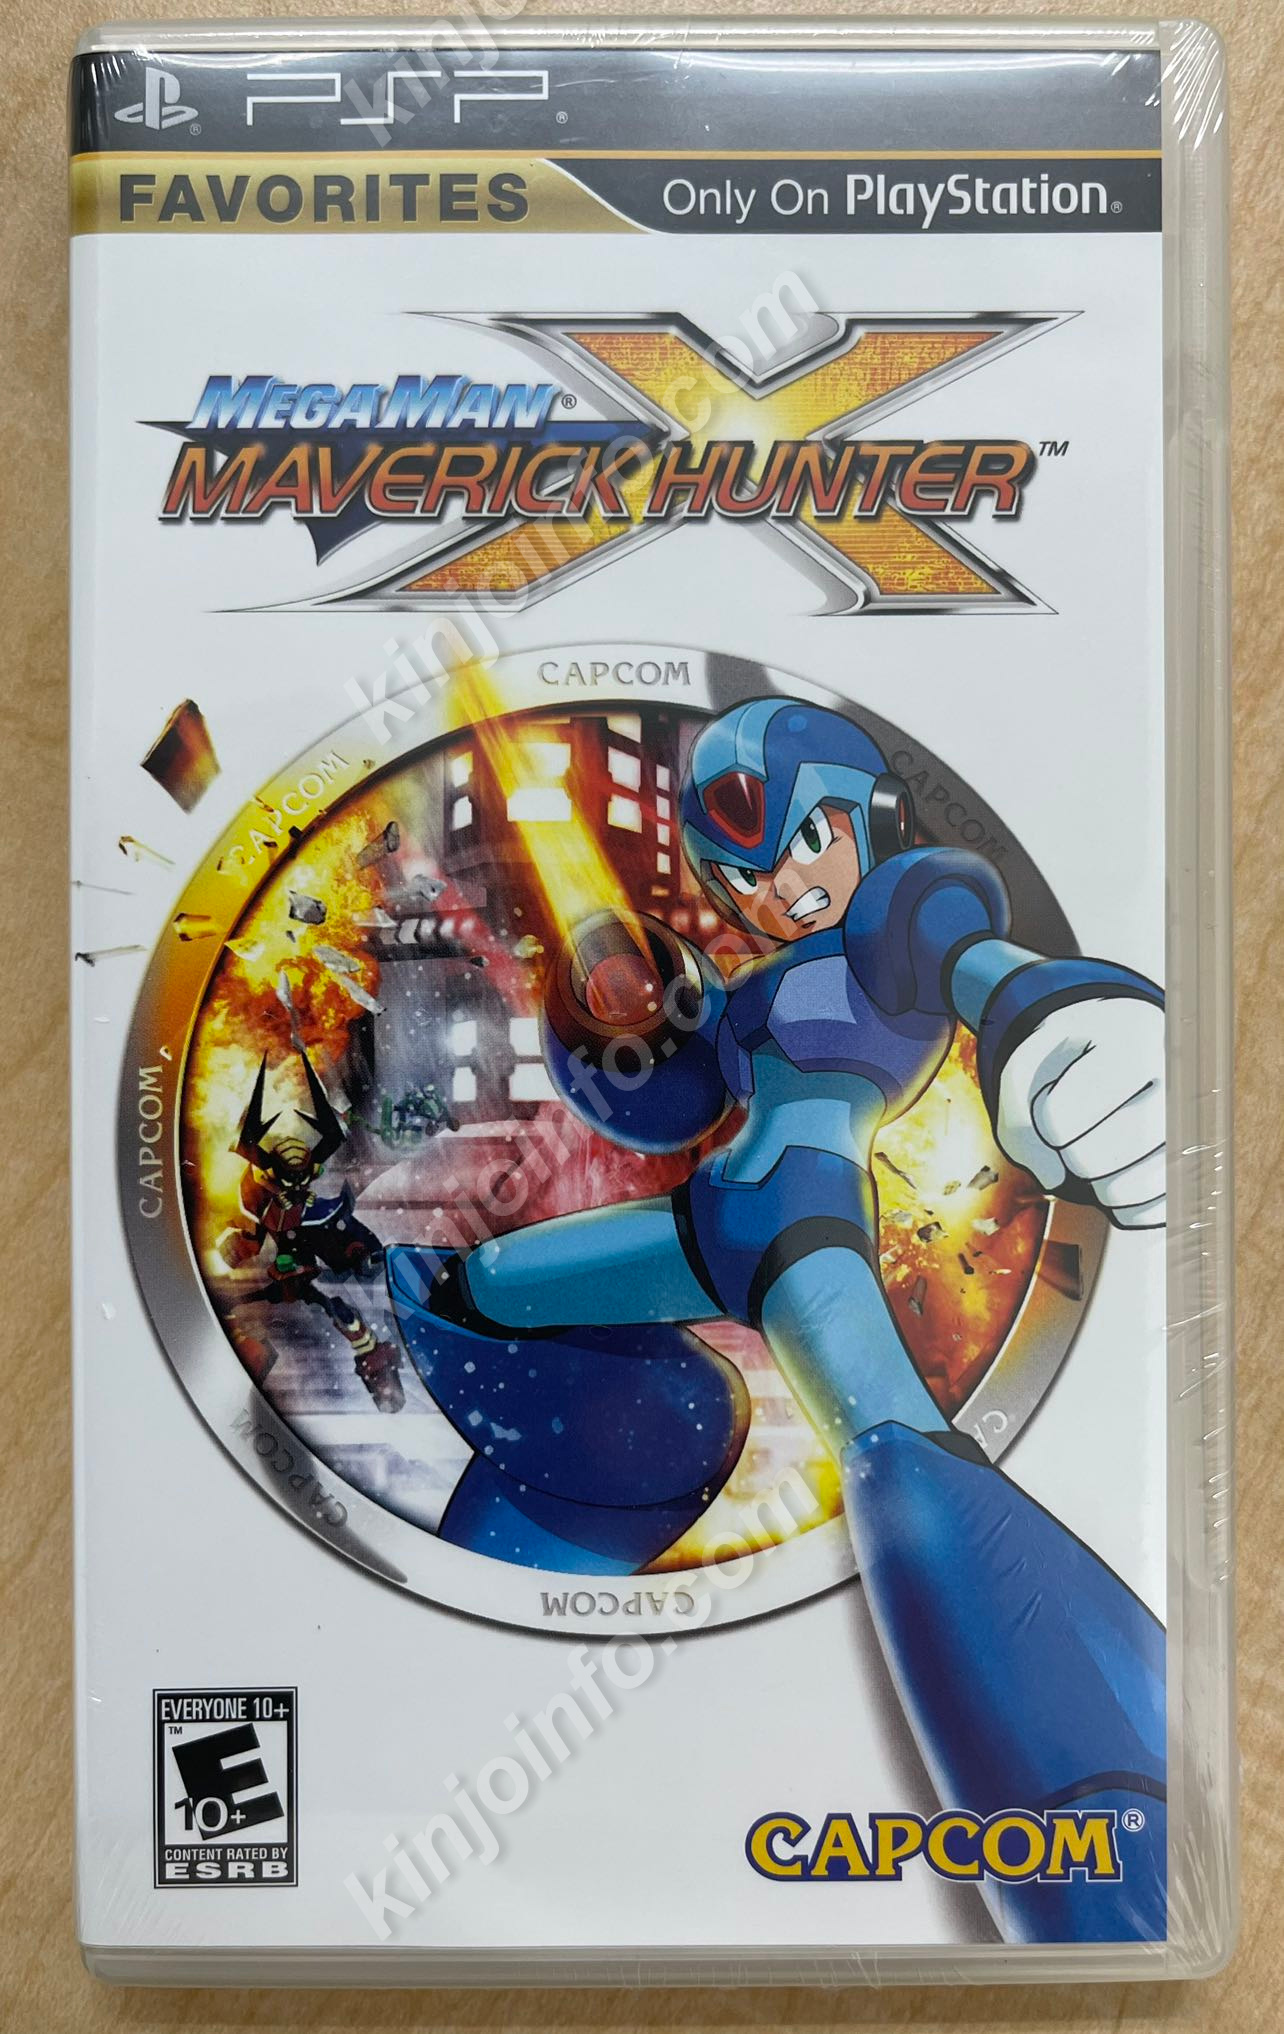 MEGA MAN MAVERICK HUNTER X（イレギュラーハンターX）【新品未開封・PSP北米版】